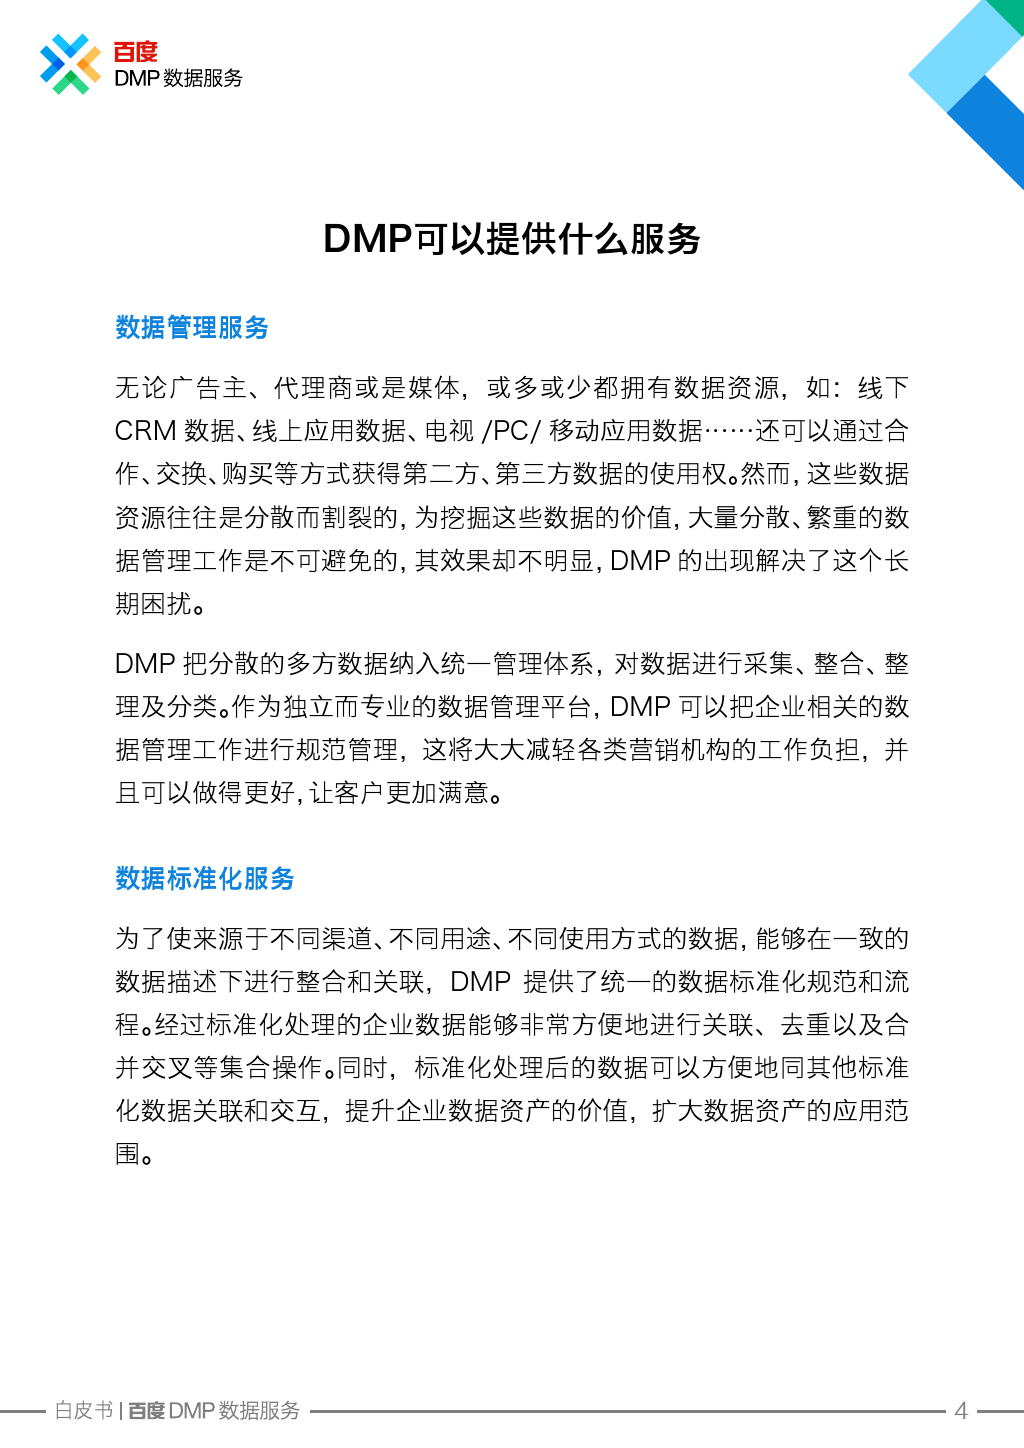 Baidu_DMP_WhitePaper_000005